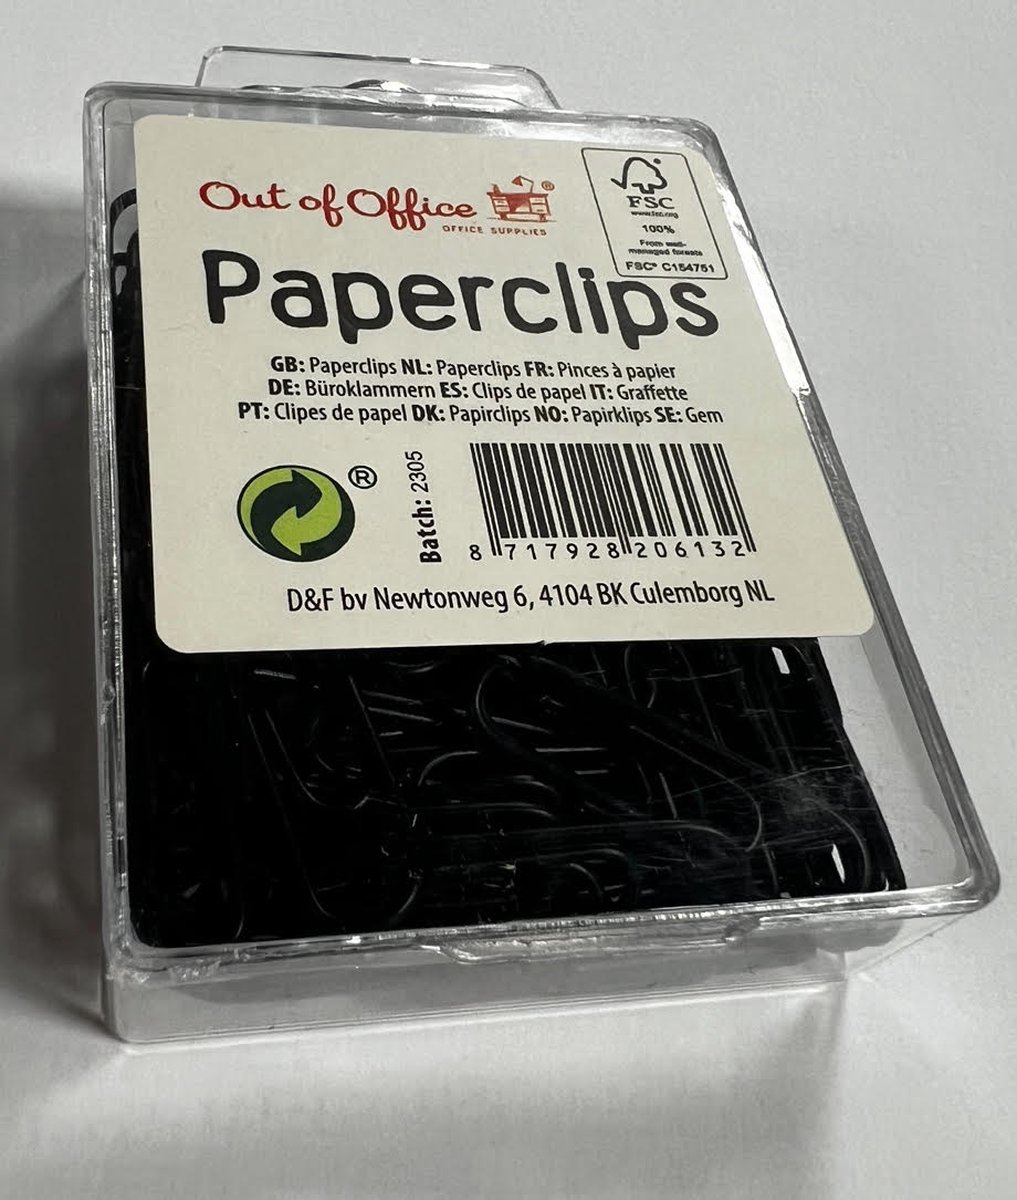 Paperclips Zwart - 100 stuks - Zwarte Paperclips - Paperclips - 28 mm - Harde Blisterverpakking - Out of office